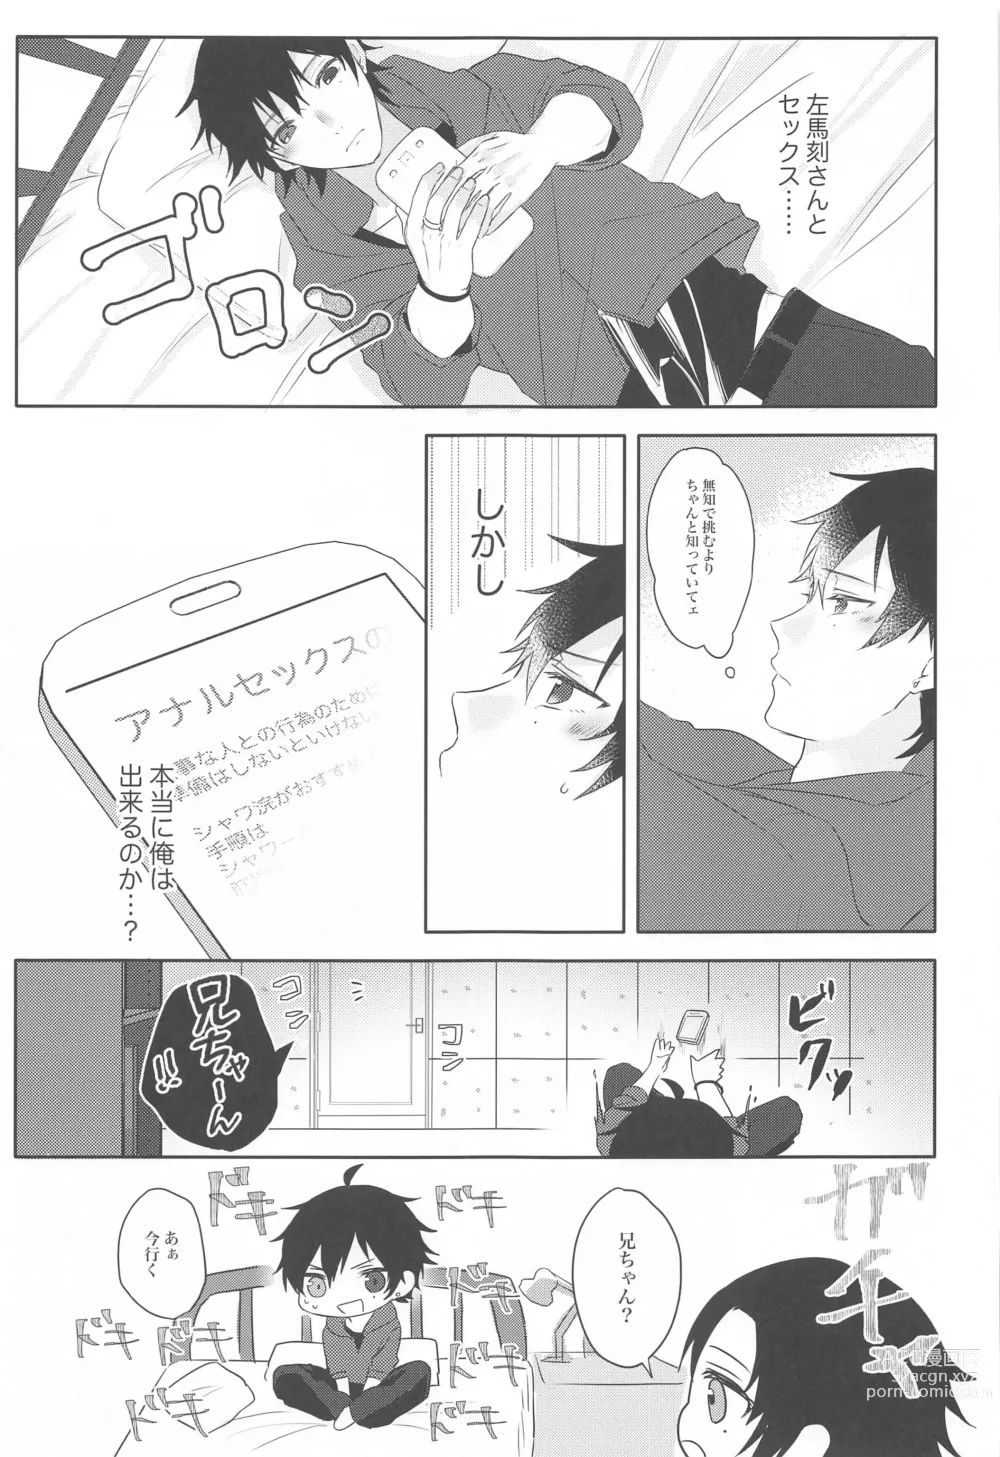 Page 3 of doujinshi Ai o Sasayaite